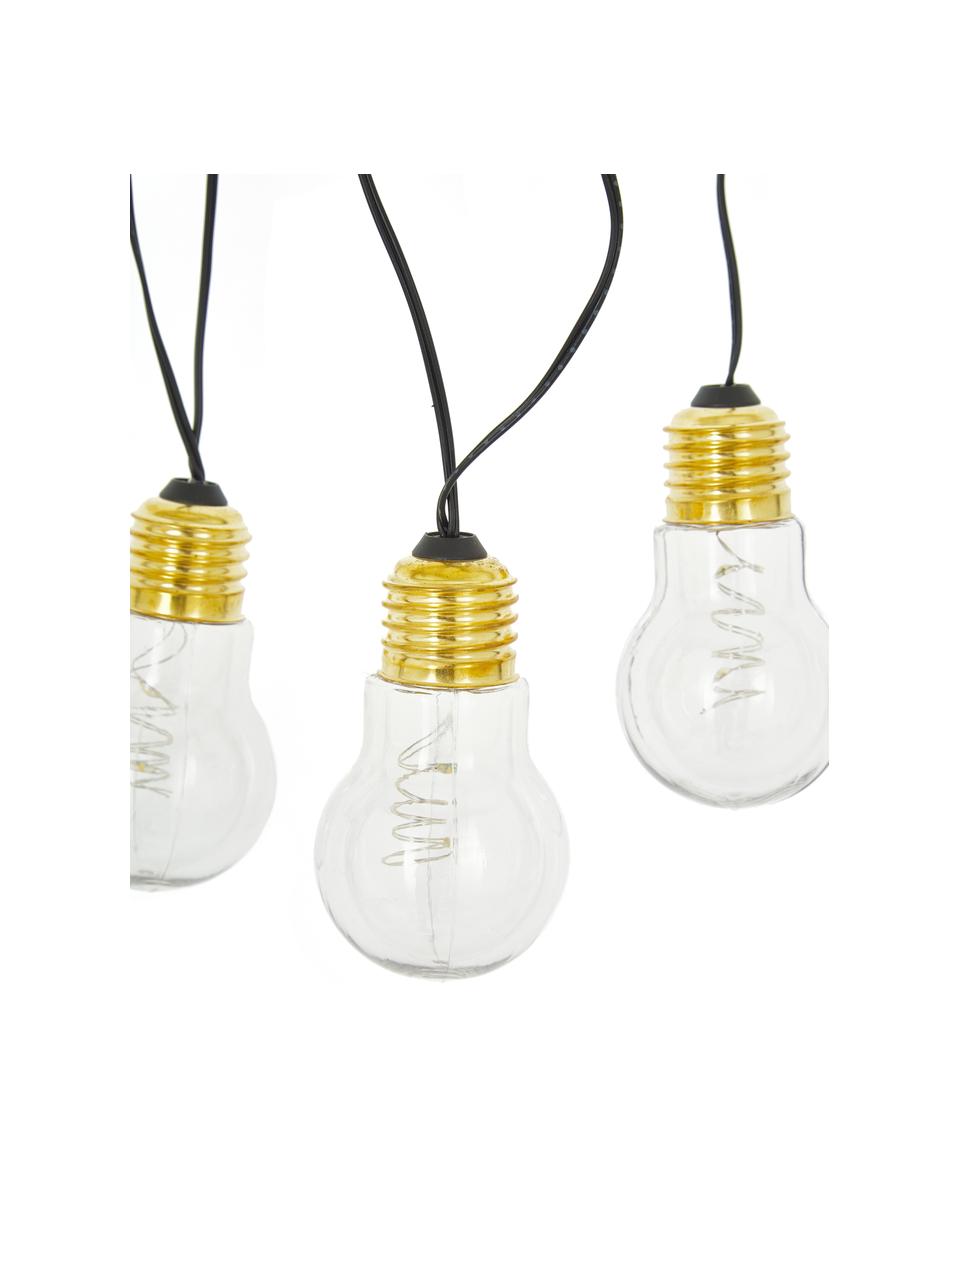 LED-Lichterkette Bulb mit Timerfunktion, 100 cm, Lampions: Kunststoff, Transparent, Goldfarben, L 100 cm, 5 Lampions